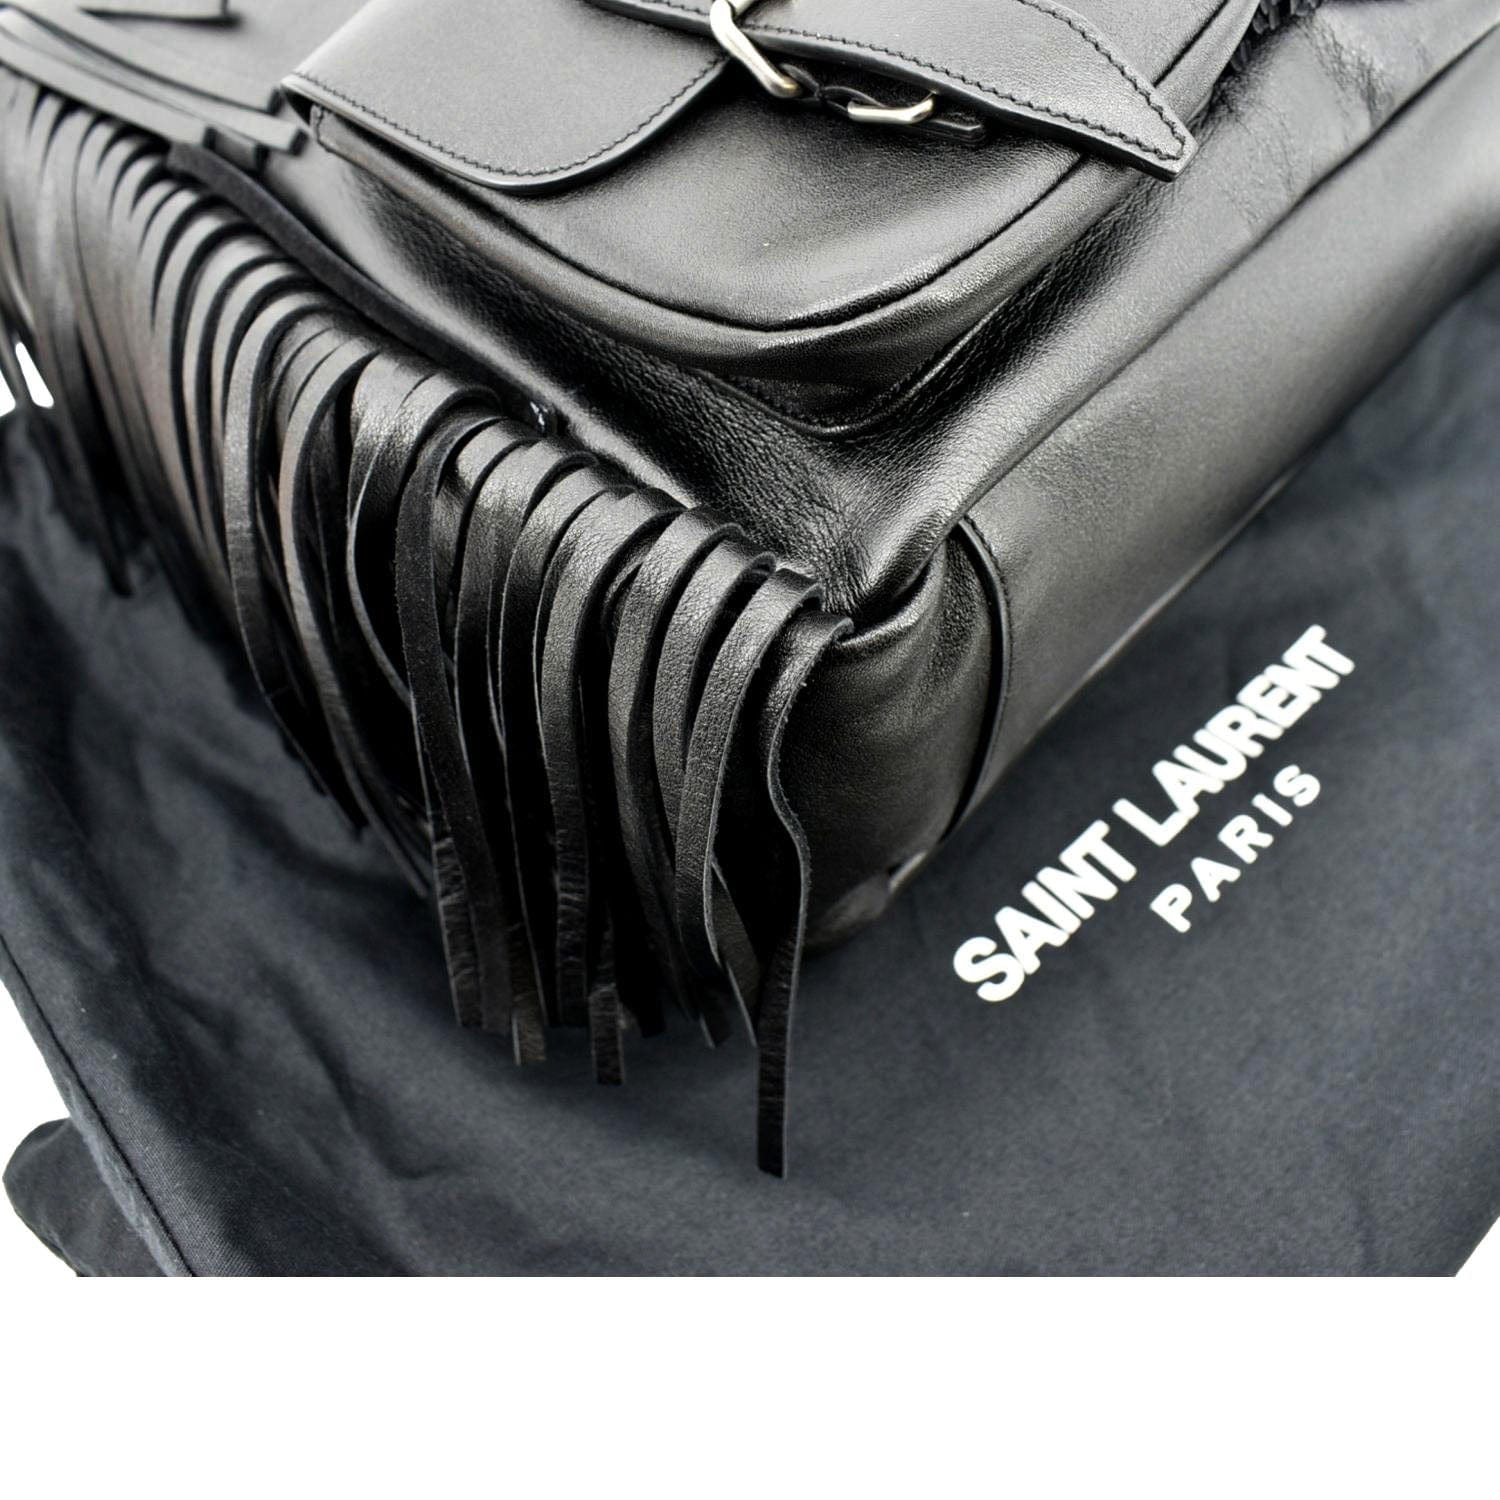 YVES SAINT LAURENT Fringe Calfskin Leather Backpack Bag Black